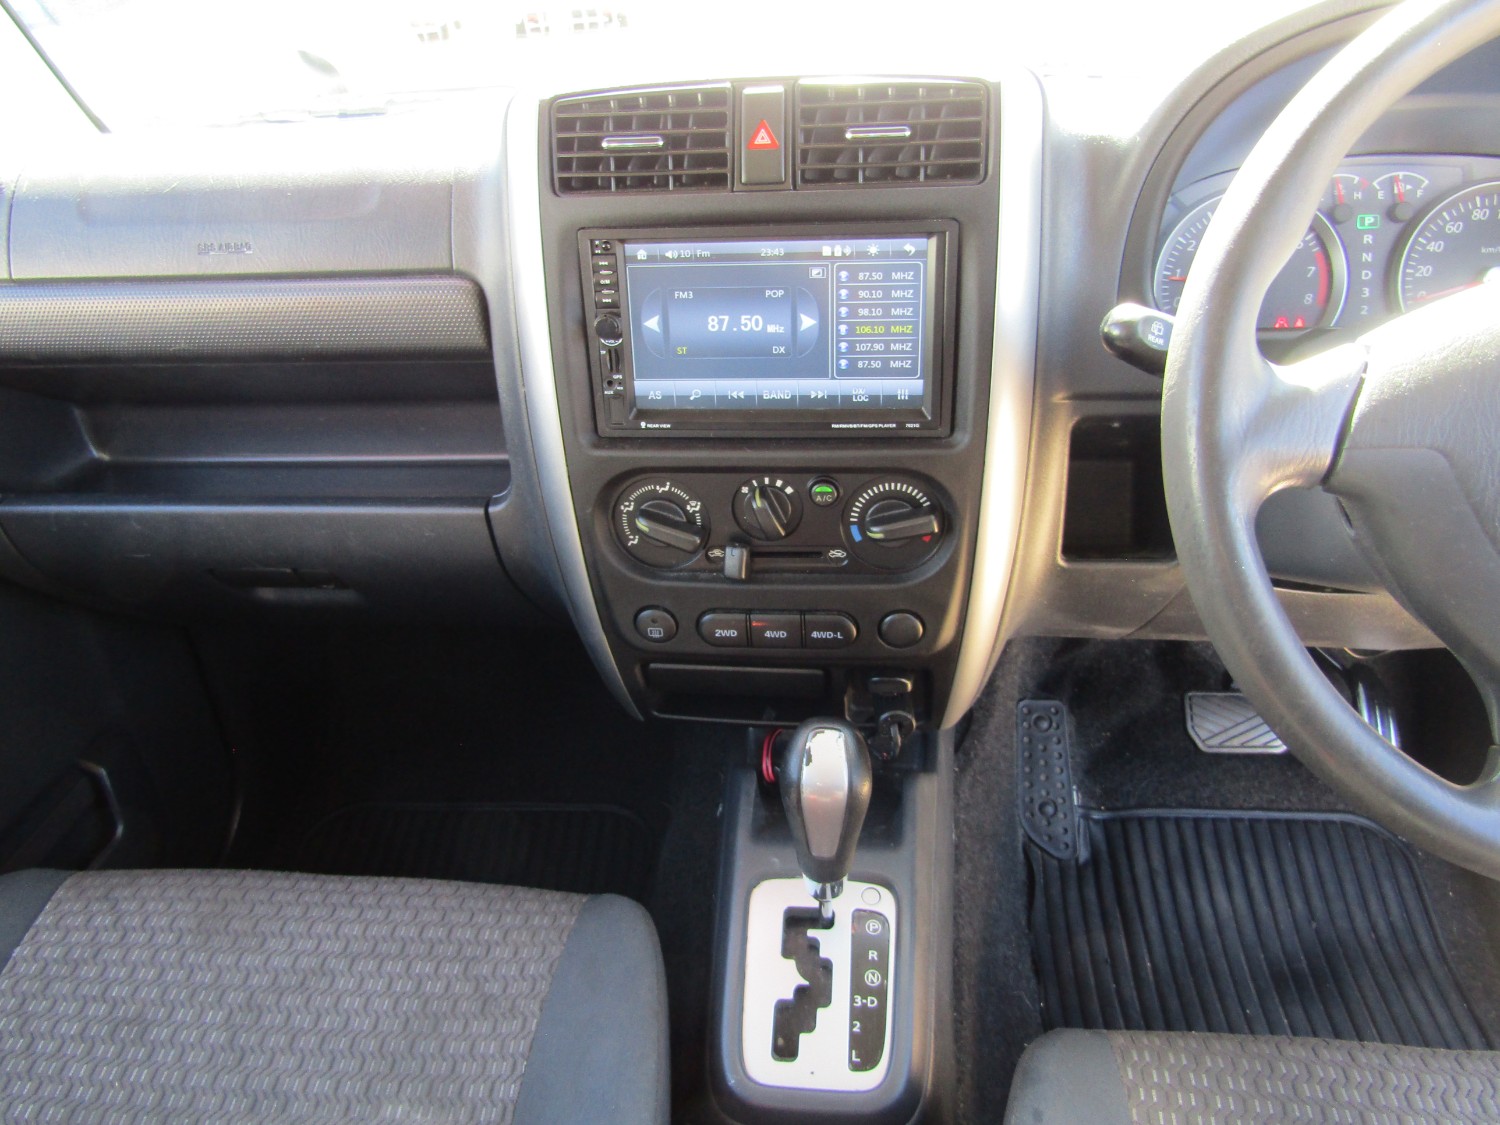 2011 Suzuki Jimny SUV Image 26